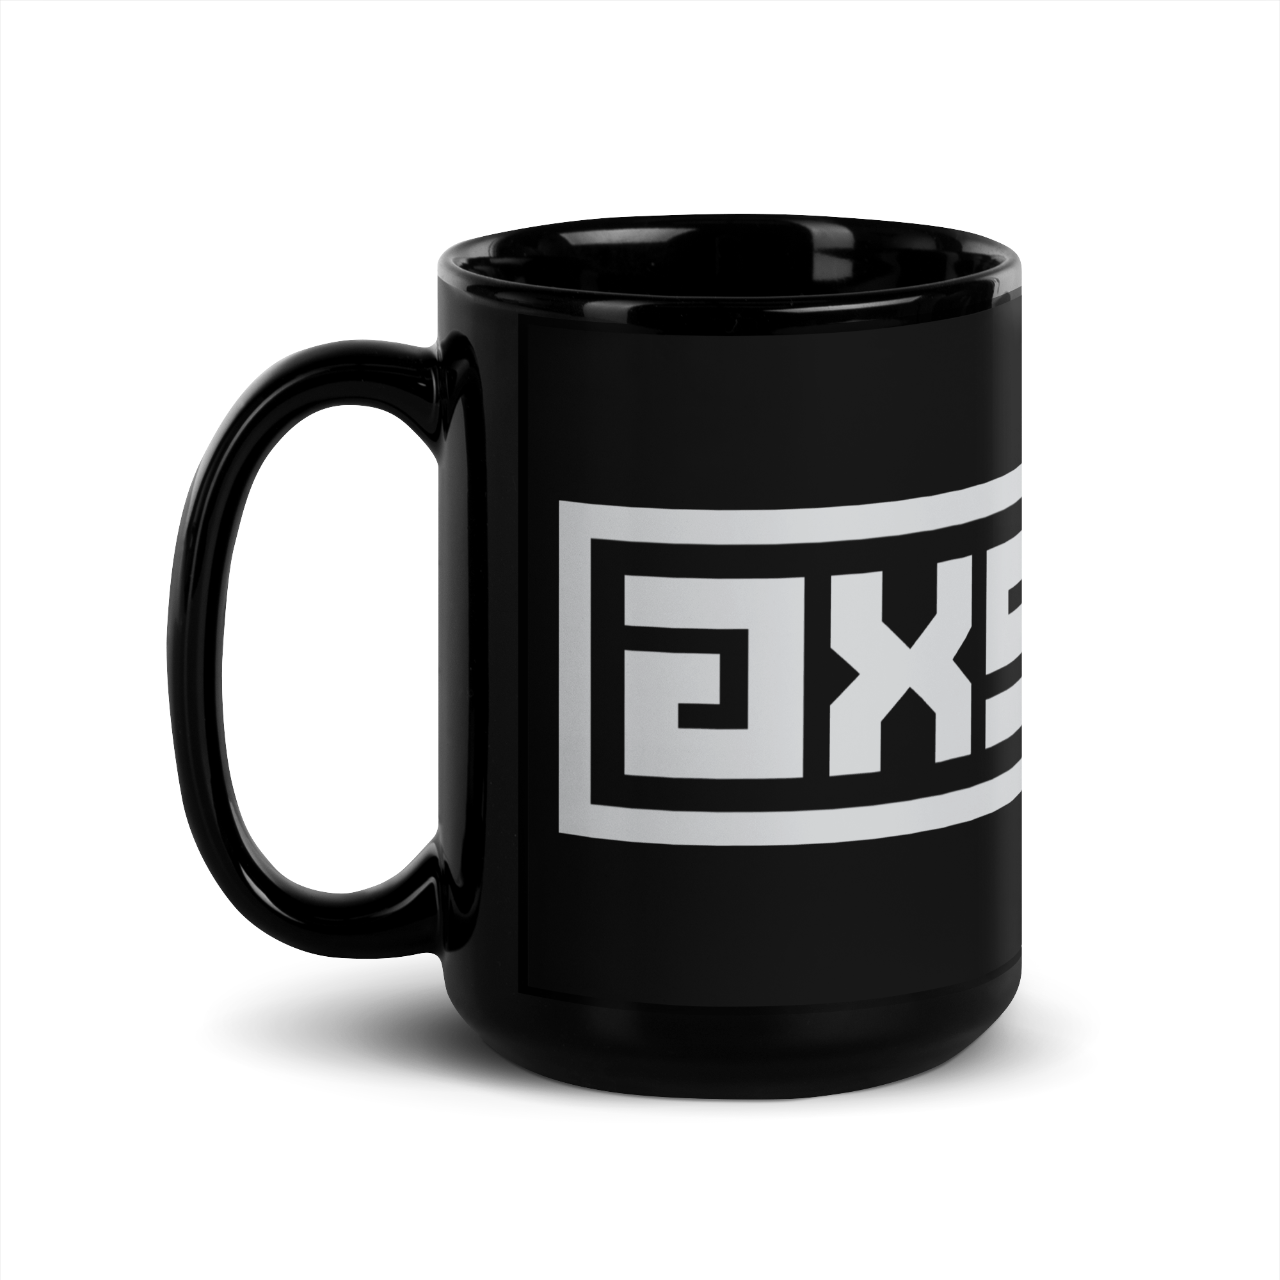 axsgtr axess electronics guitar music industry branded merchandise swag black ceramic coffee mug 15oz